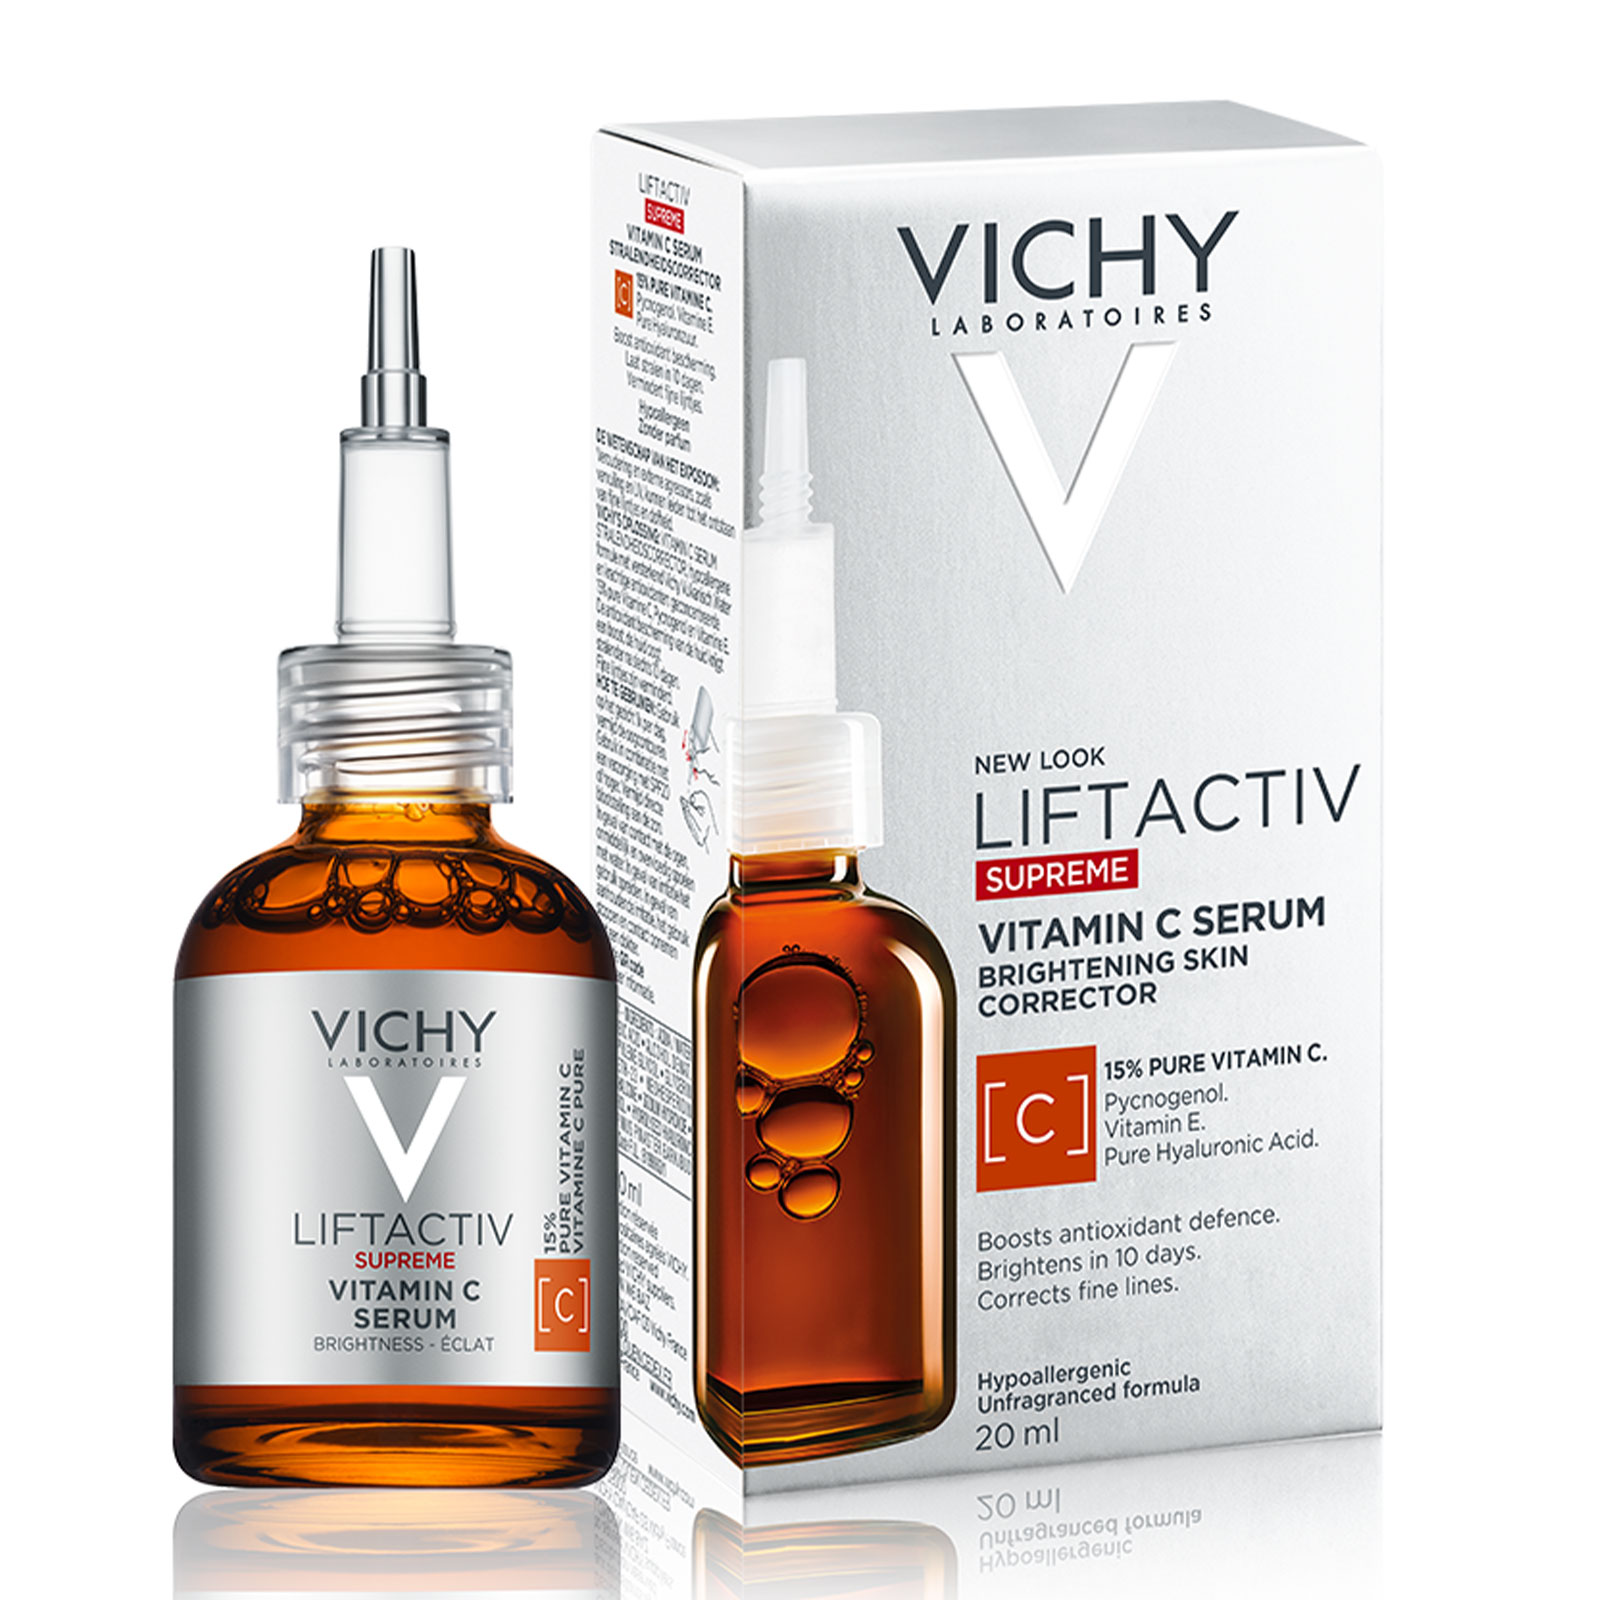 Vichy Liftactiv Supreme&nbsp;15% Pure Vitamin C Brightening Skin Corrector Serum 20ml